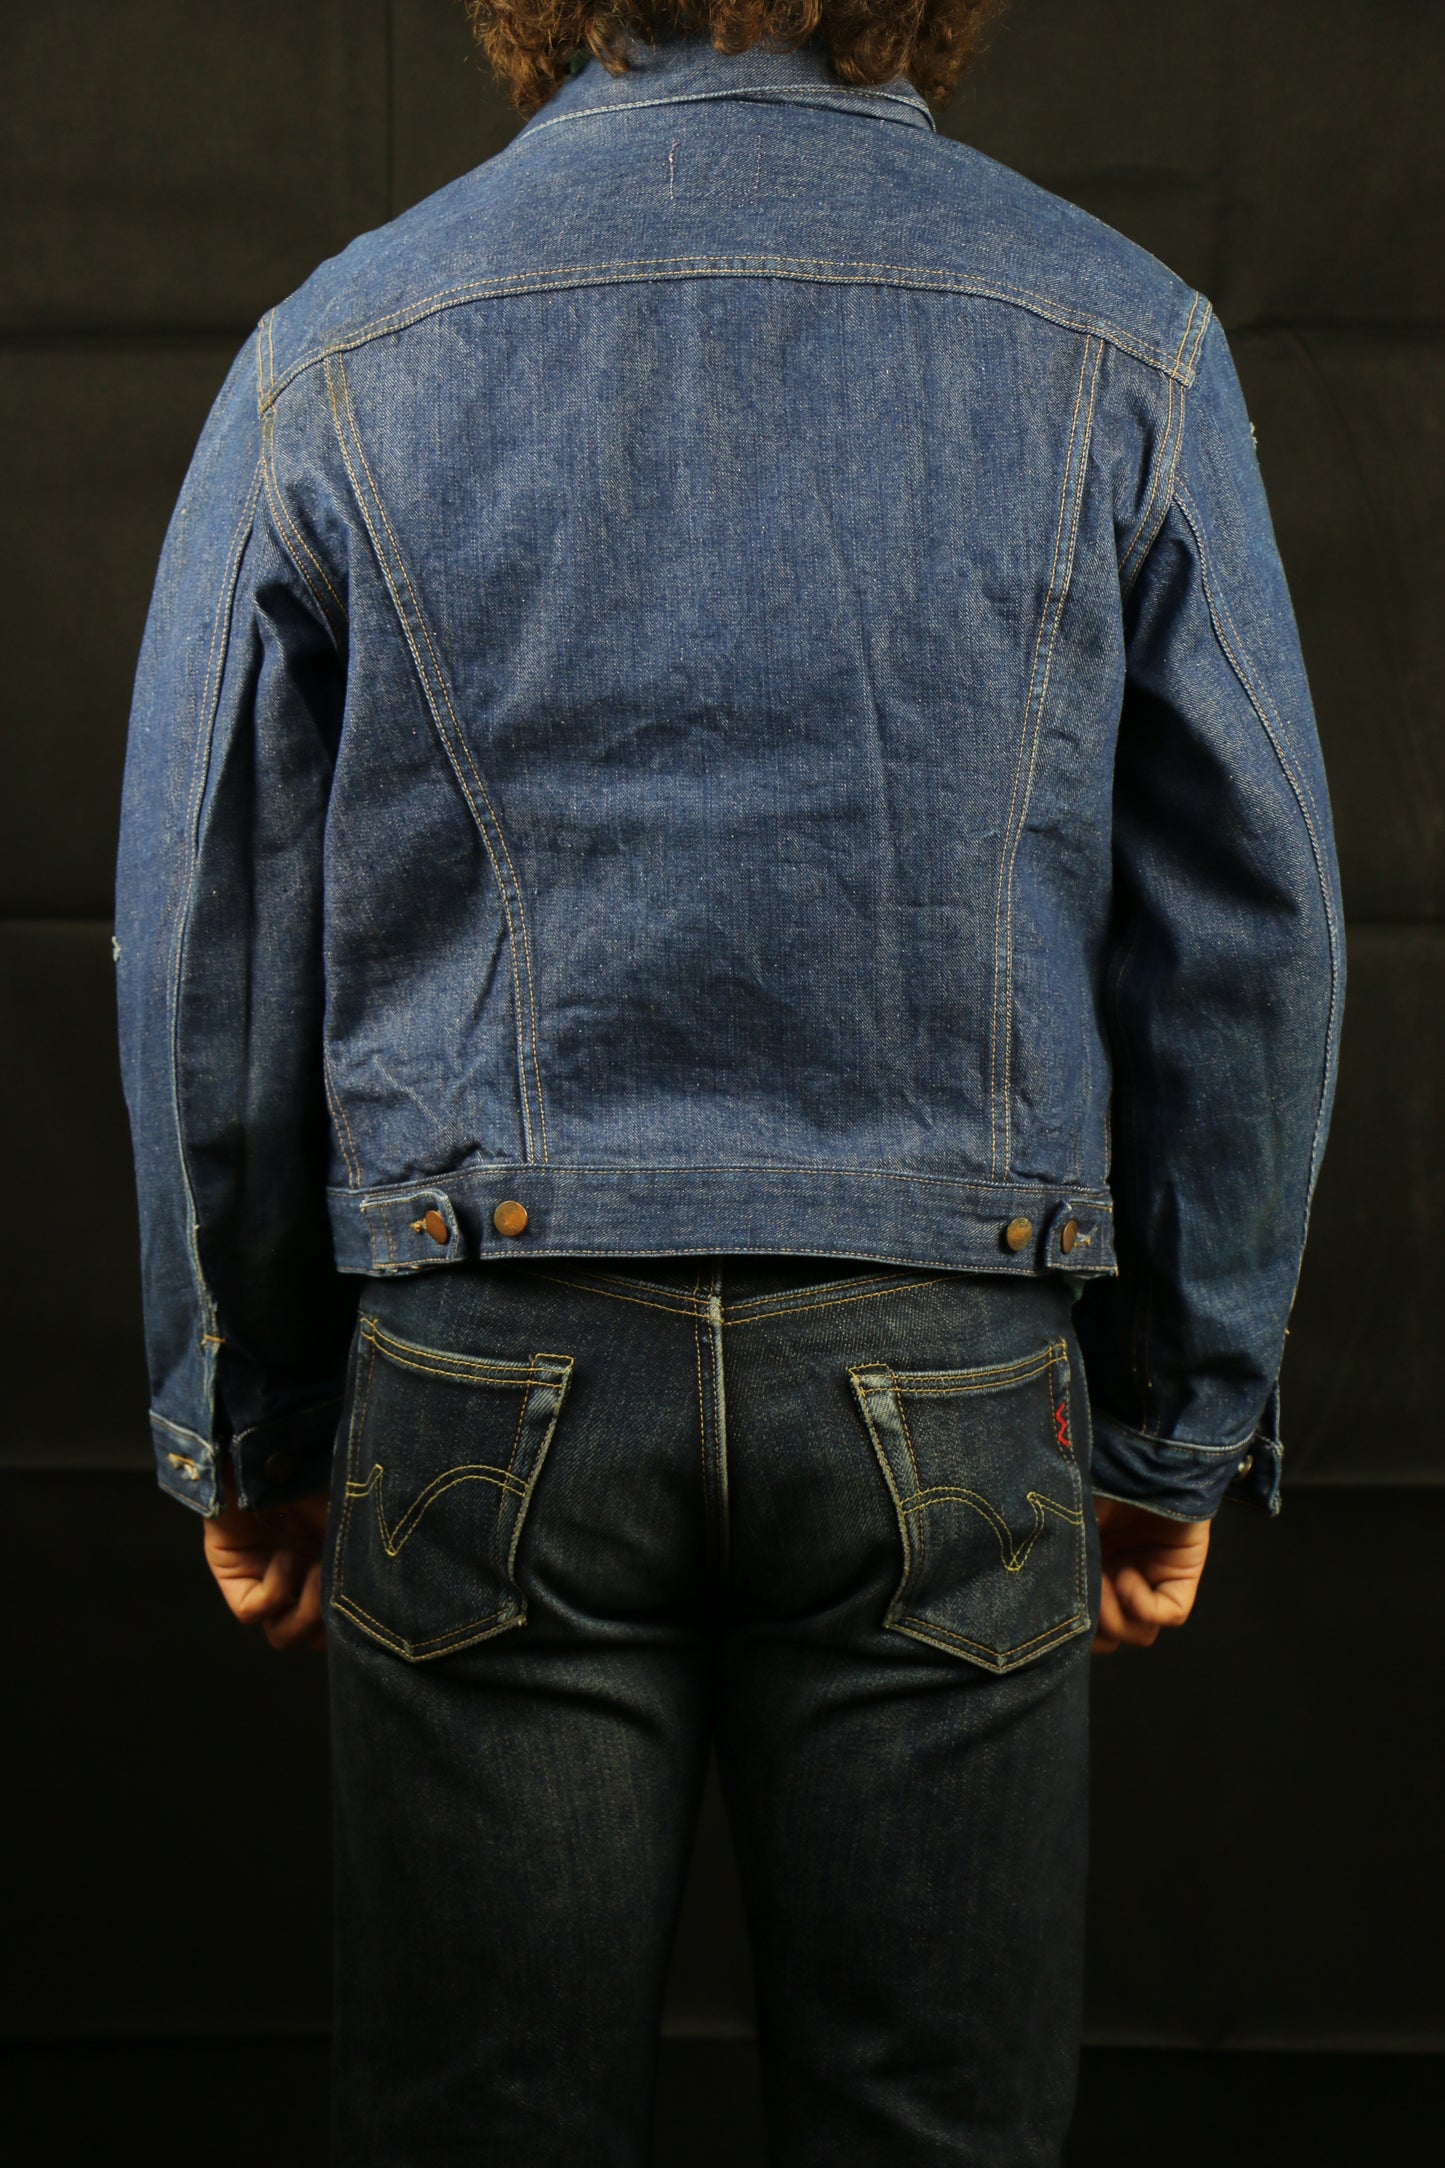 60s Wrangler Denim Jacket - vintage clothing  clochard92.com